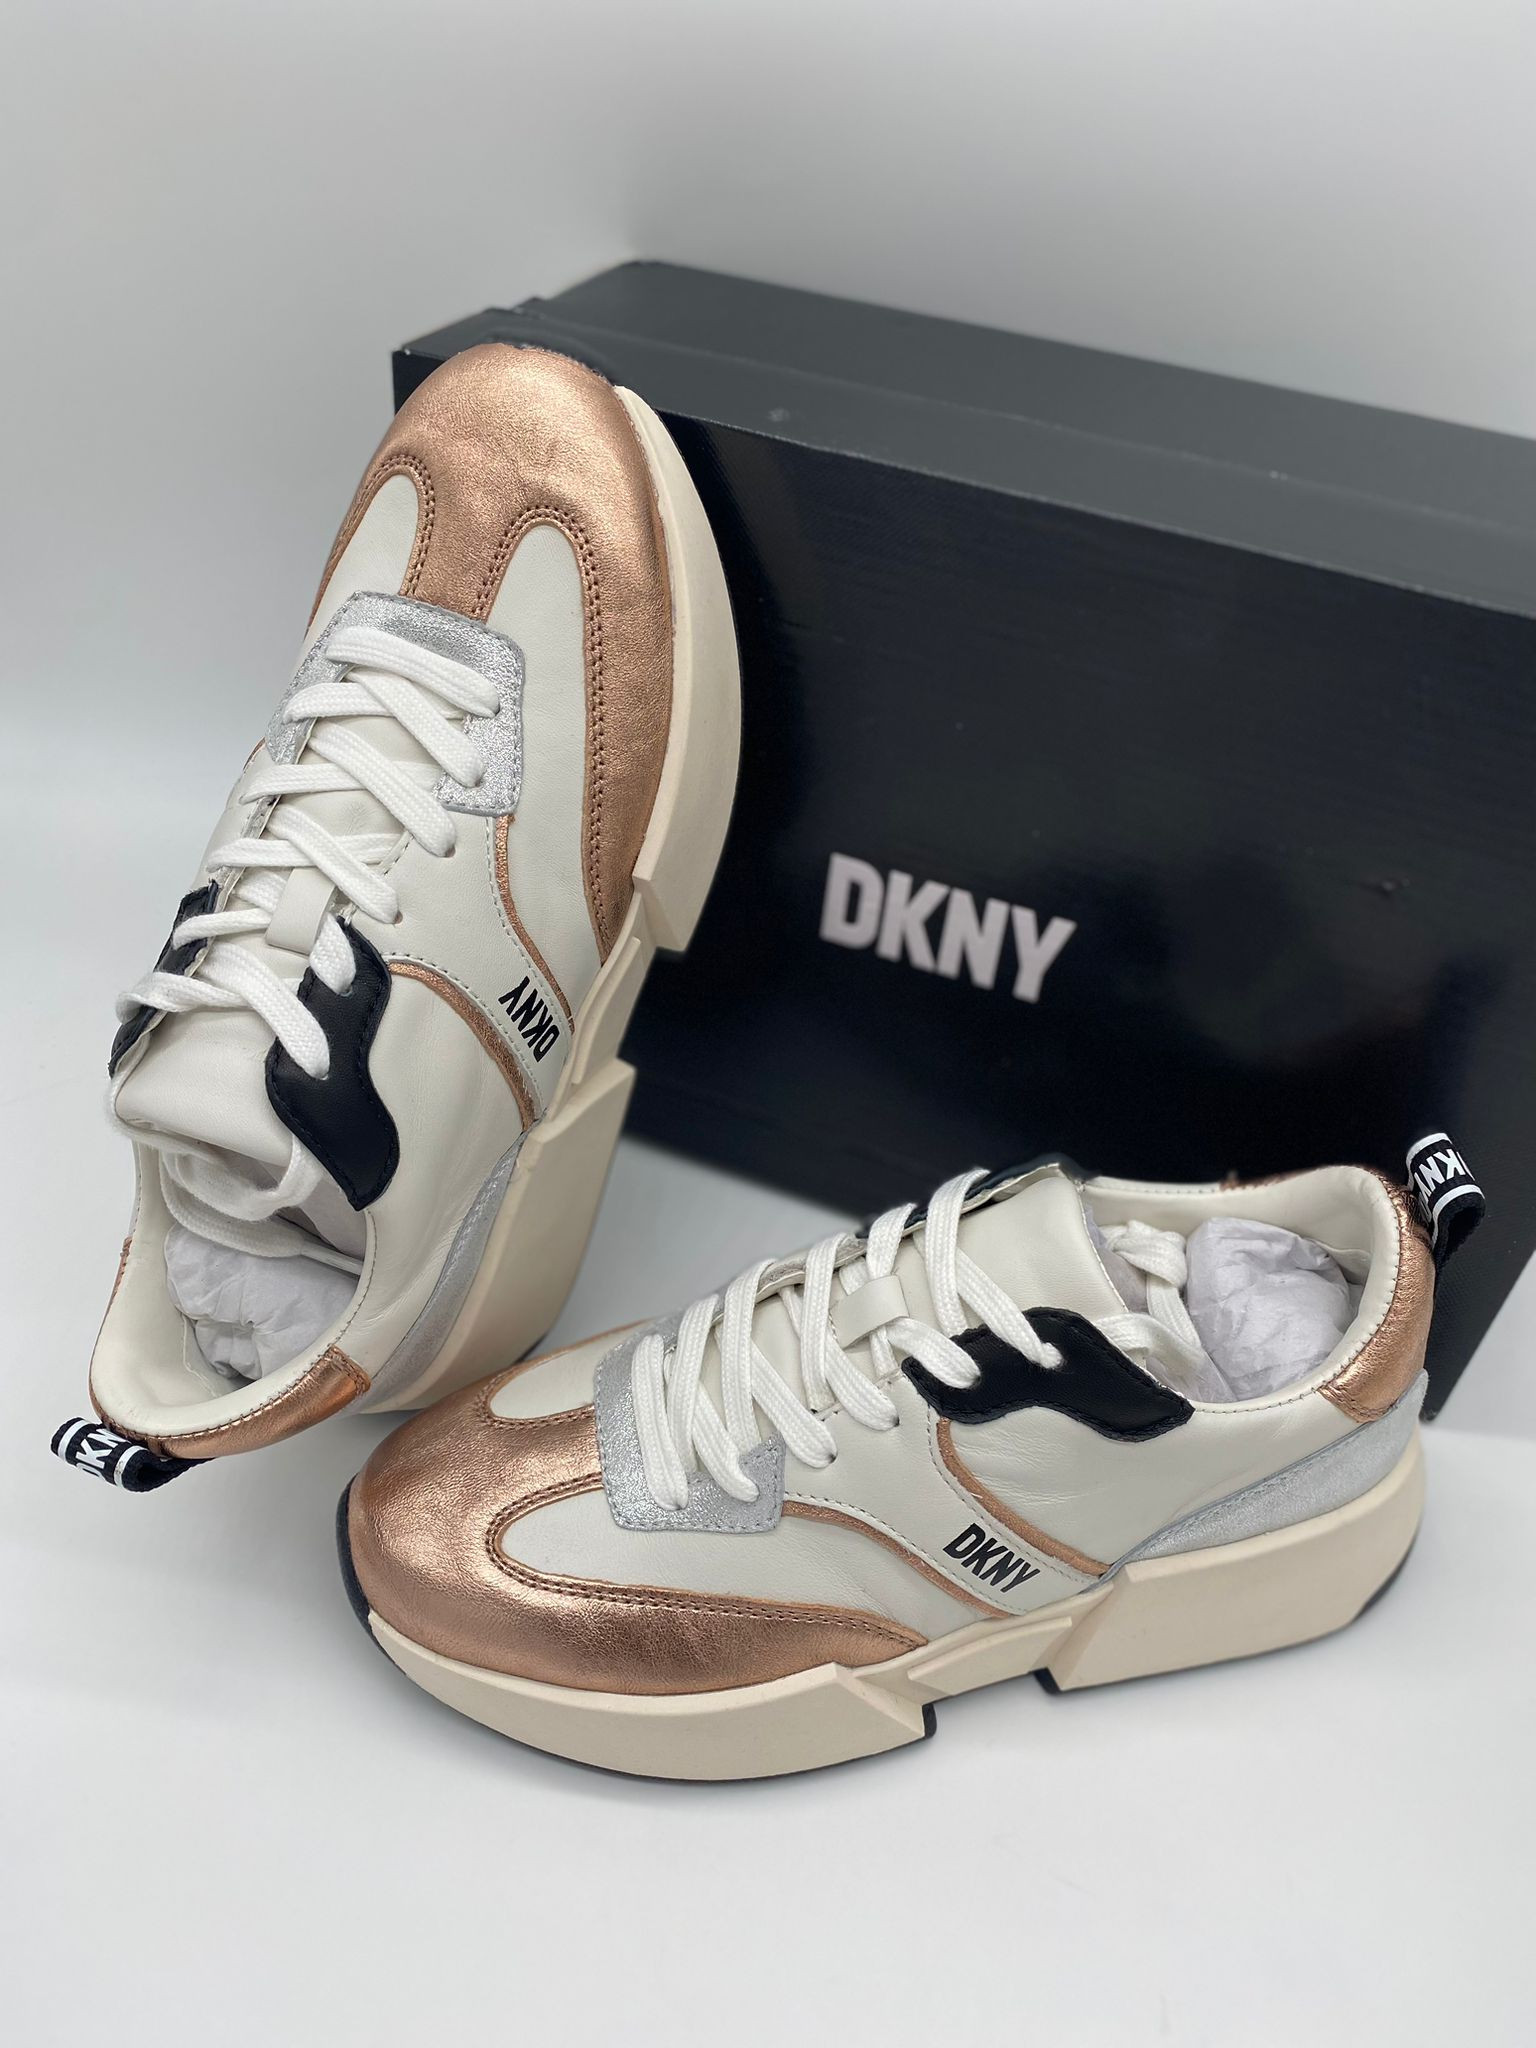 DKNY Retro Sneaker - Wht/Blk/Sil - US 8/ UK 5.5/ EUR 38.5